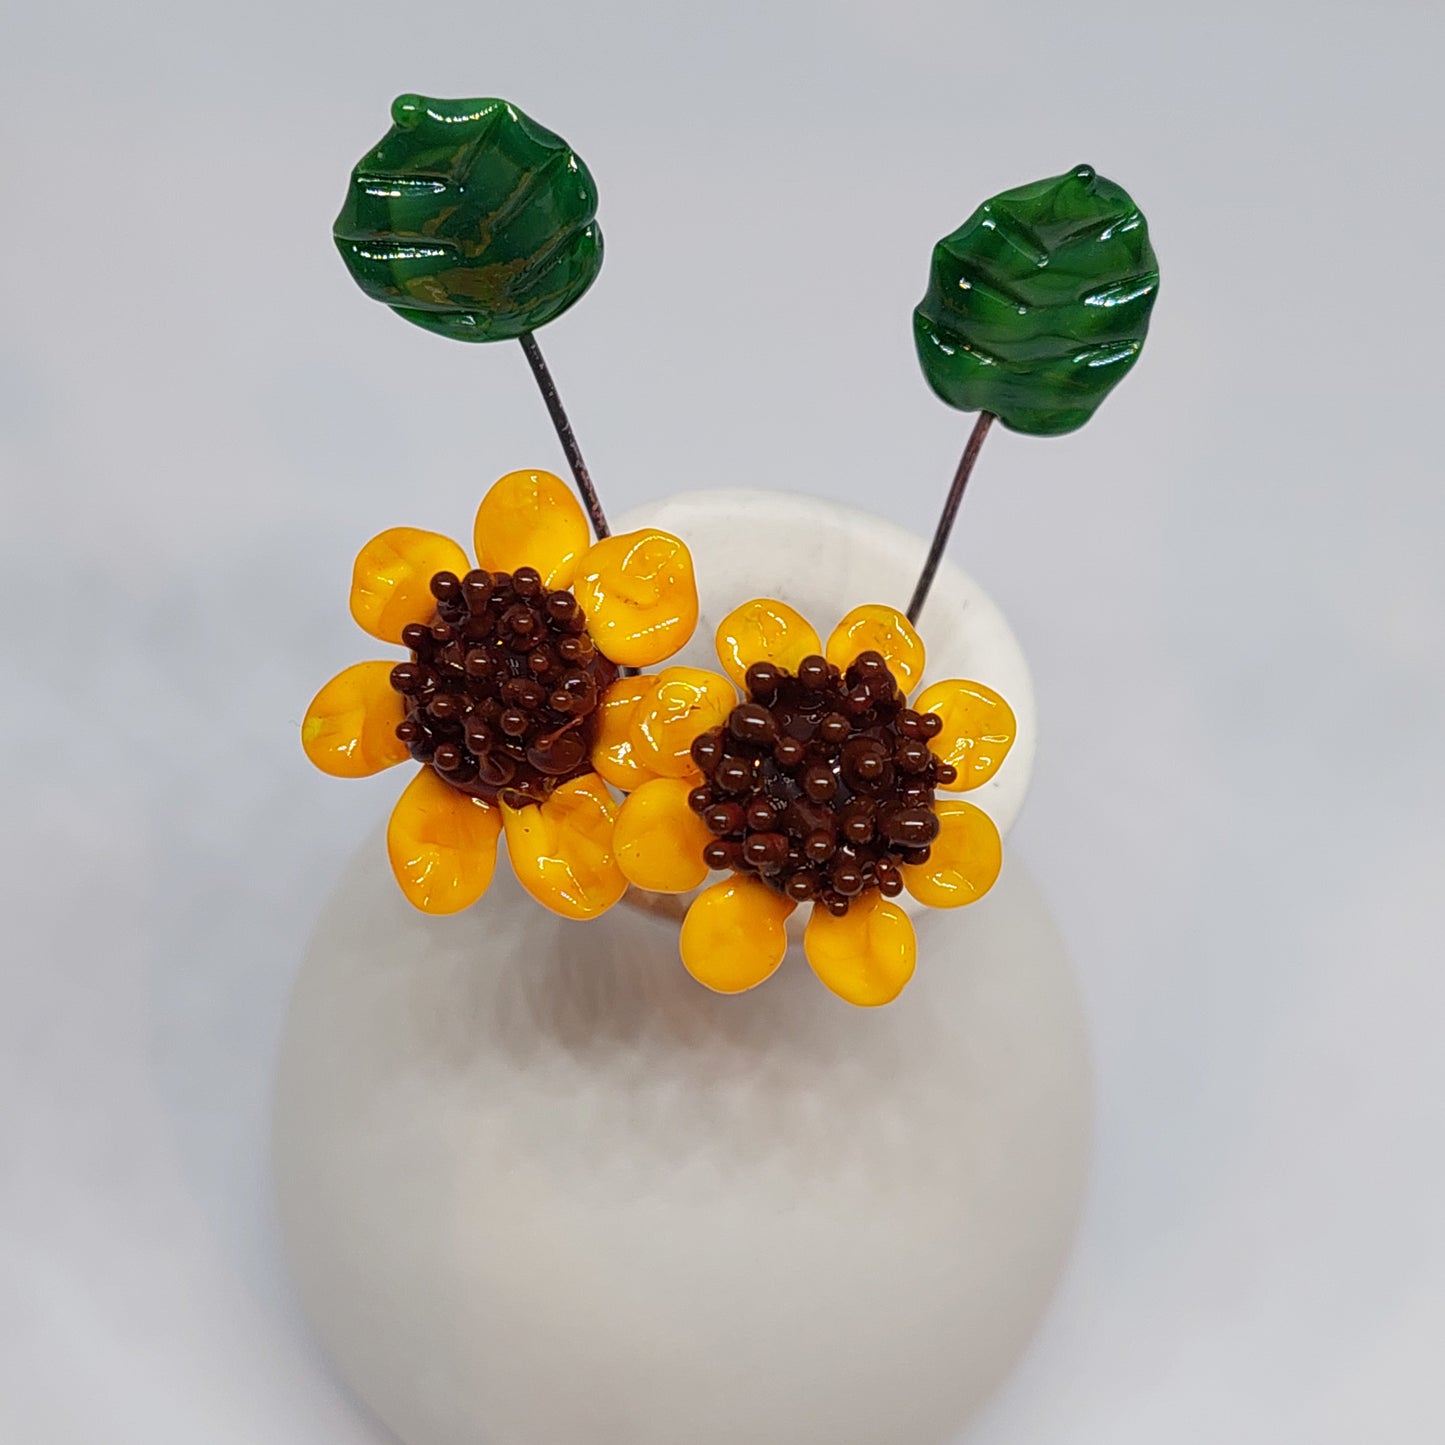 NEW!! Glass Art - Sunflowers - Tiny Bouquet